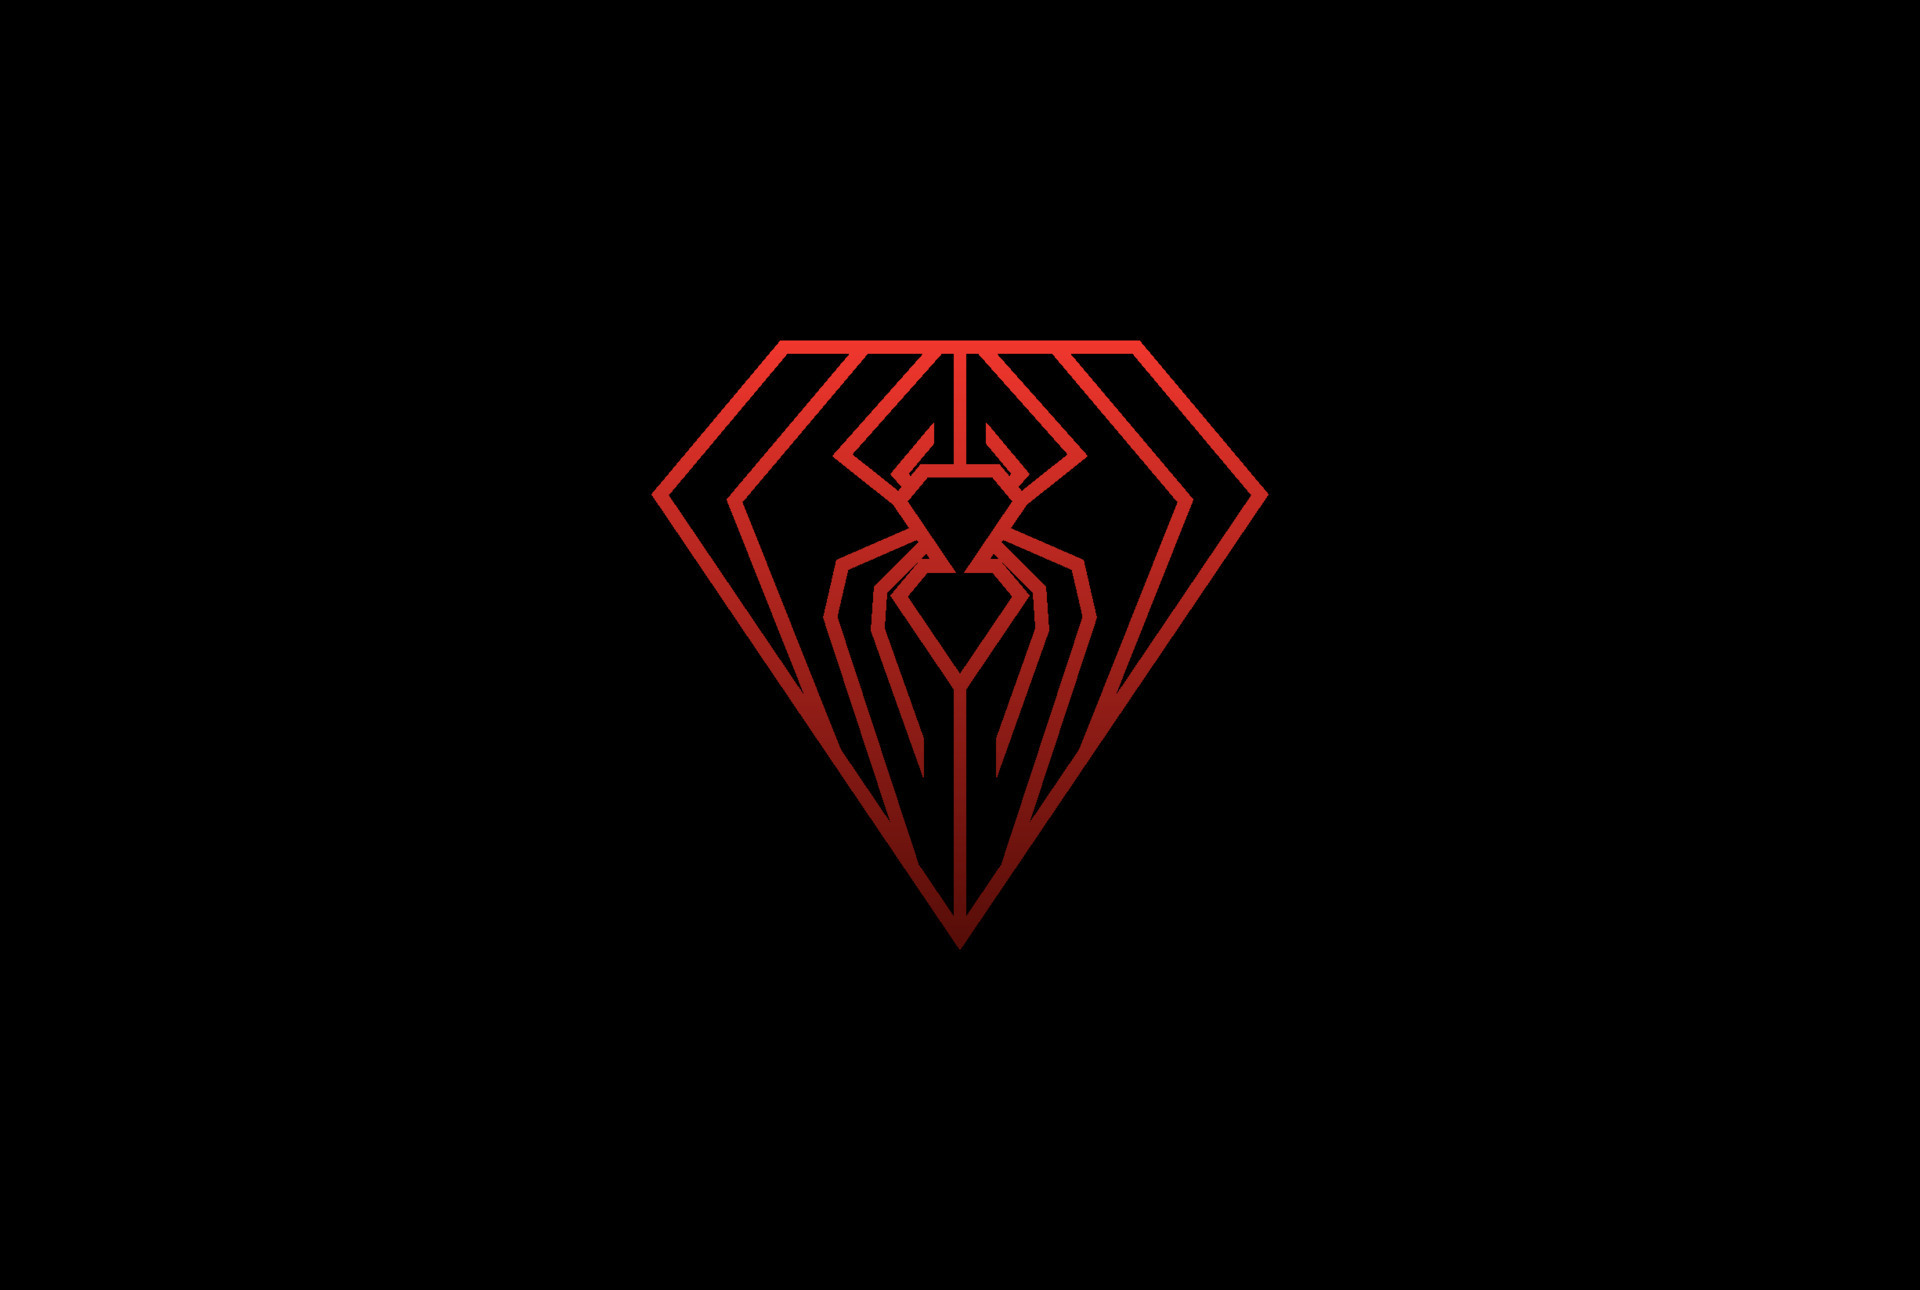 Geometric Diamond Red Widow Spider for Sport Team Club Logo Design Vector  7968270 Vector Art at Vecteezy